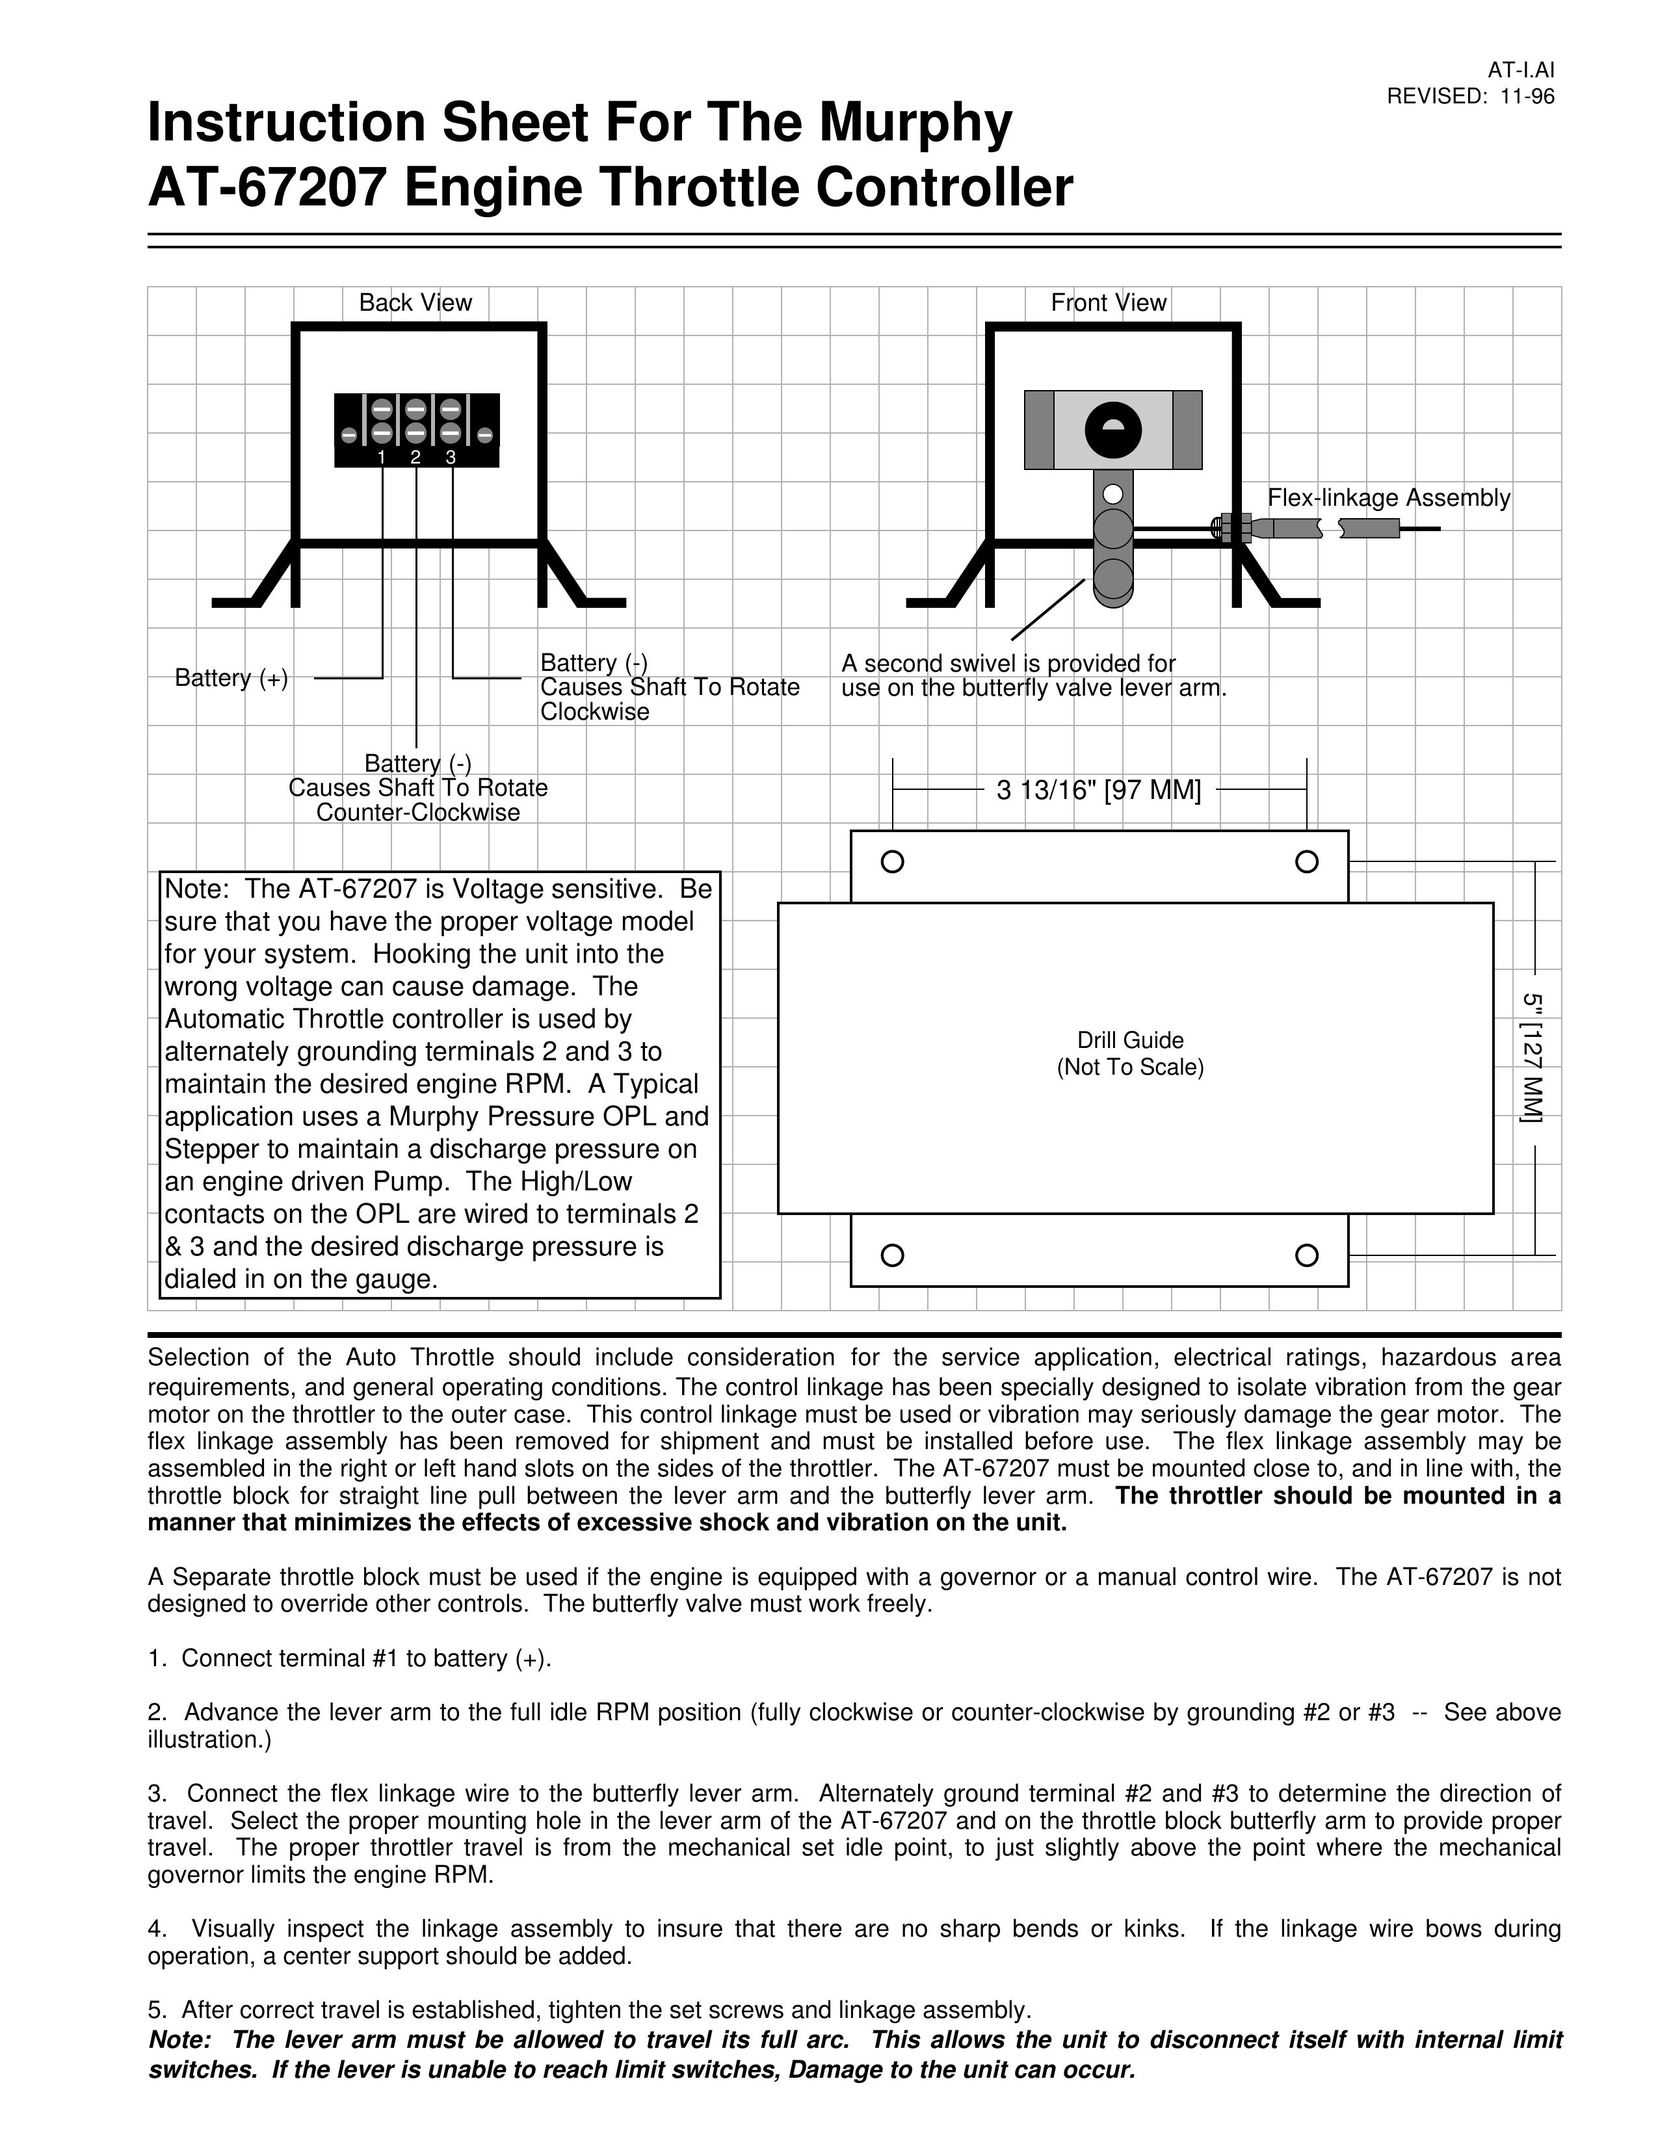 Murphy AT-67207 Network Card User Manual